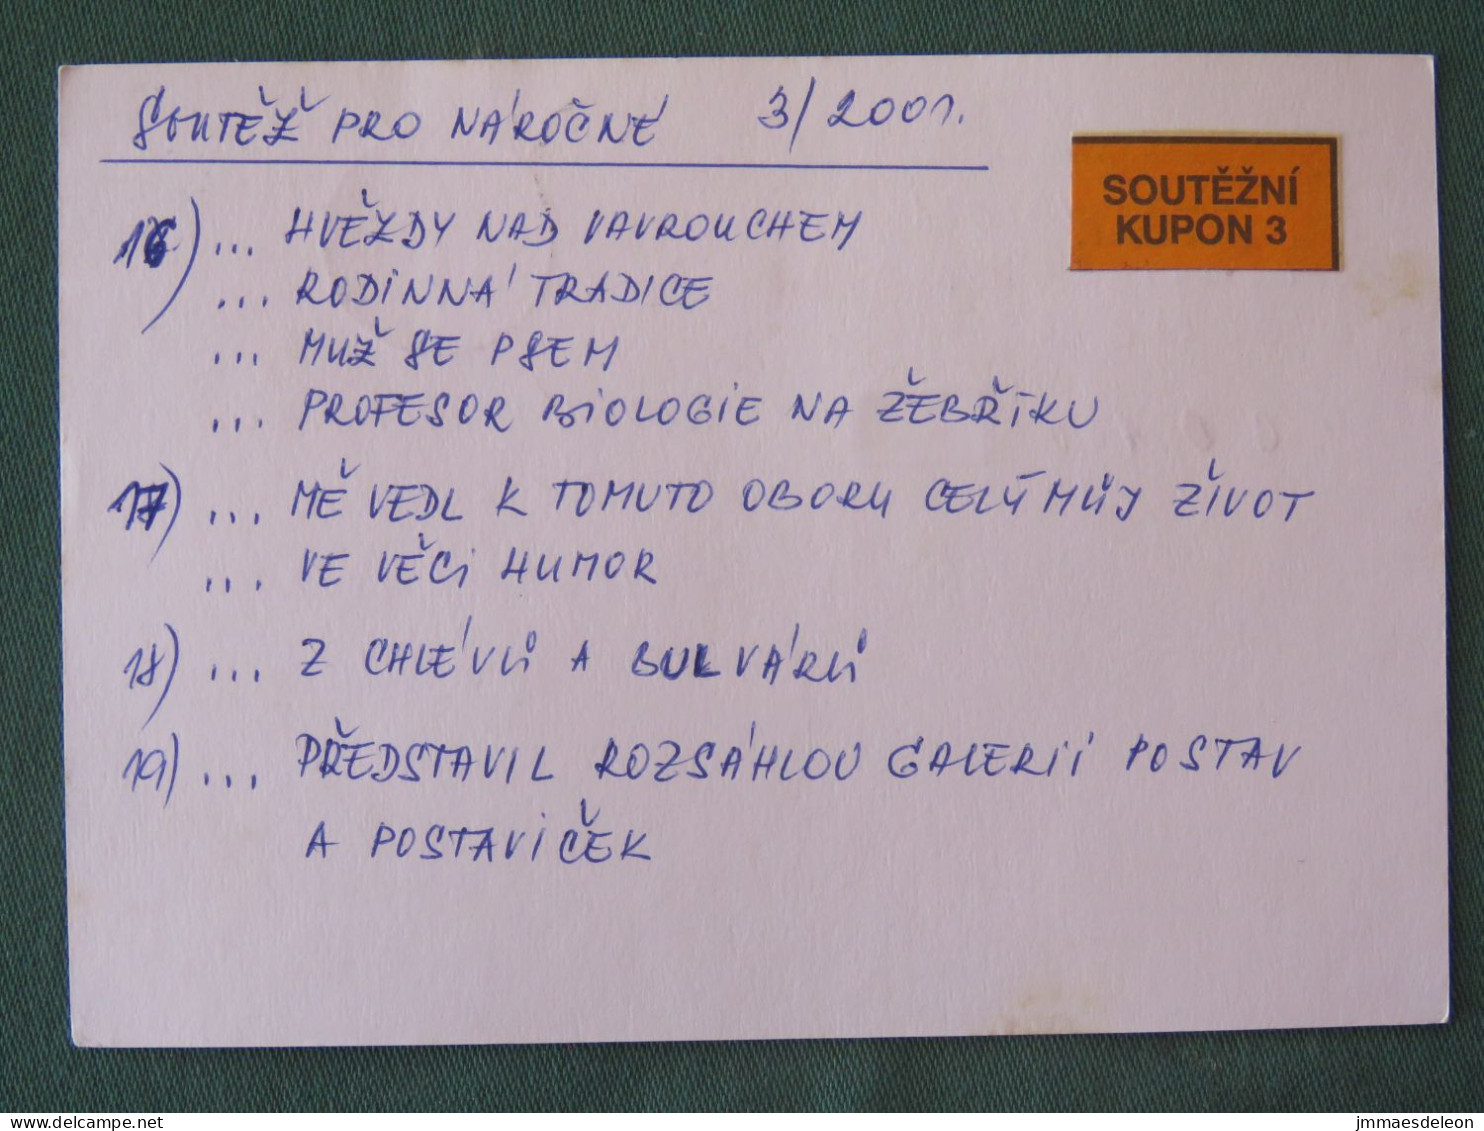 Czech Republic 2001 Stationery Postcard 5 Kcs Prague Sent Locally + Church - Briefe U. Dokumente